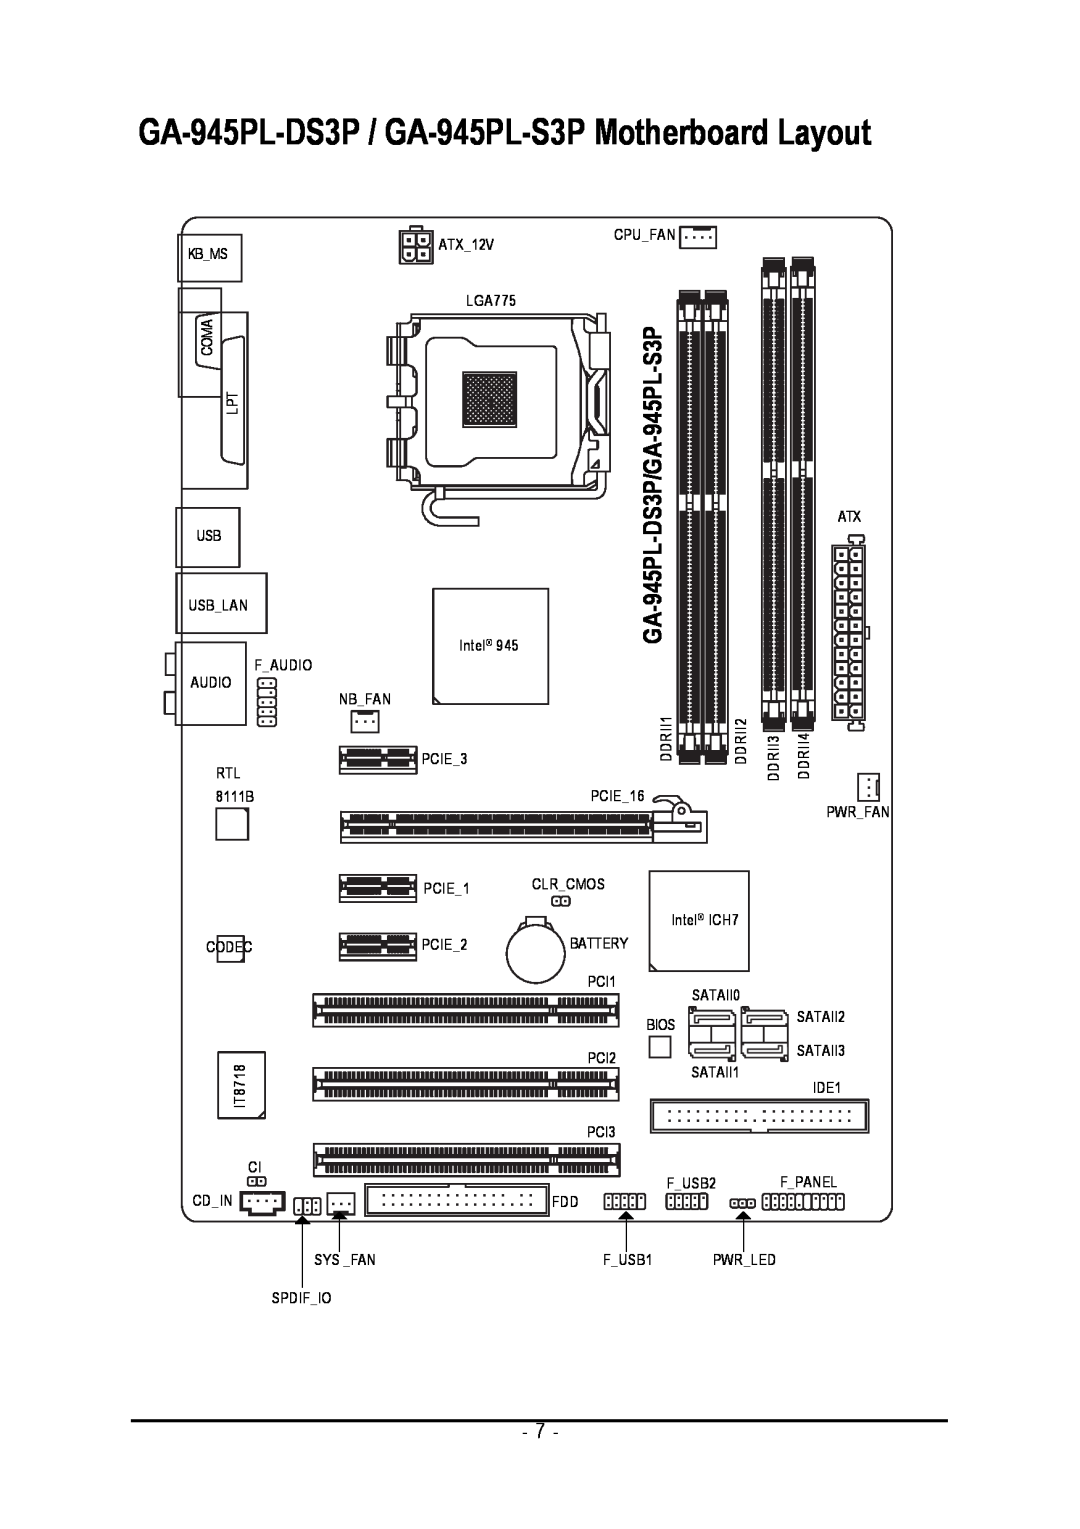 Intel user manual GA-945PL-DS3P / GA-945PL-S3P Motherboard Layout, GA-945PL-DS3P/GA-945PL-S3P 